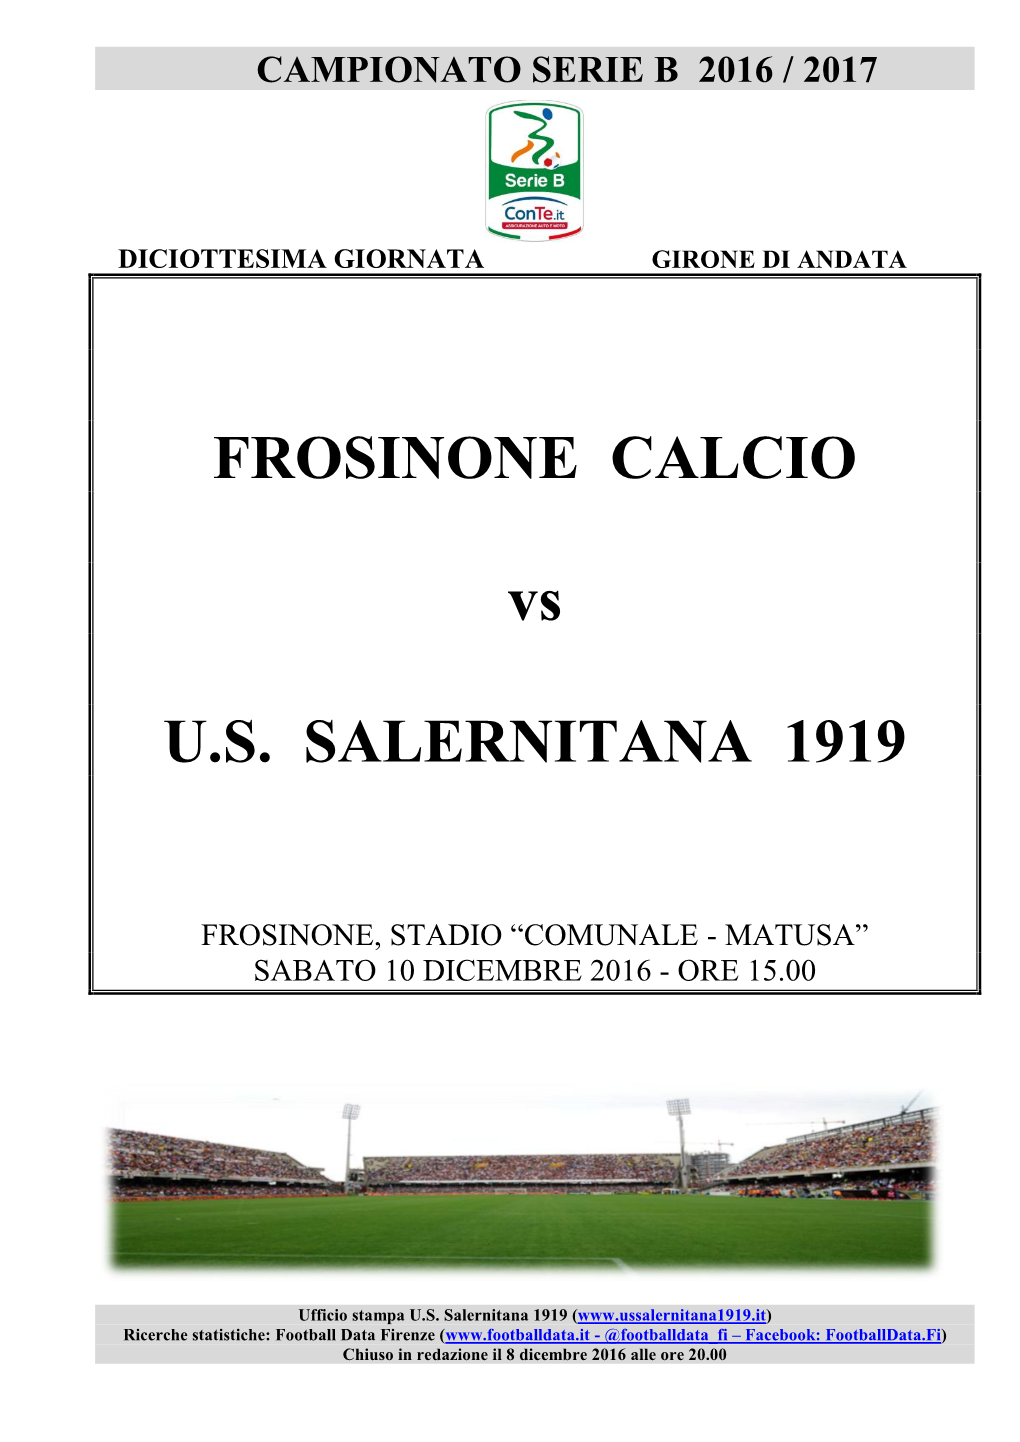 FROSINONE CALCIO Vs U.S. SALERNITANA 1919